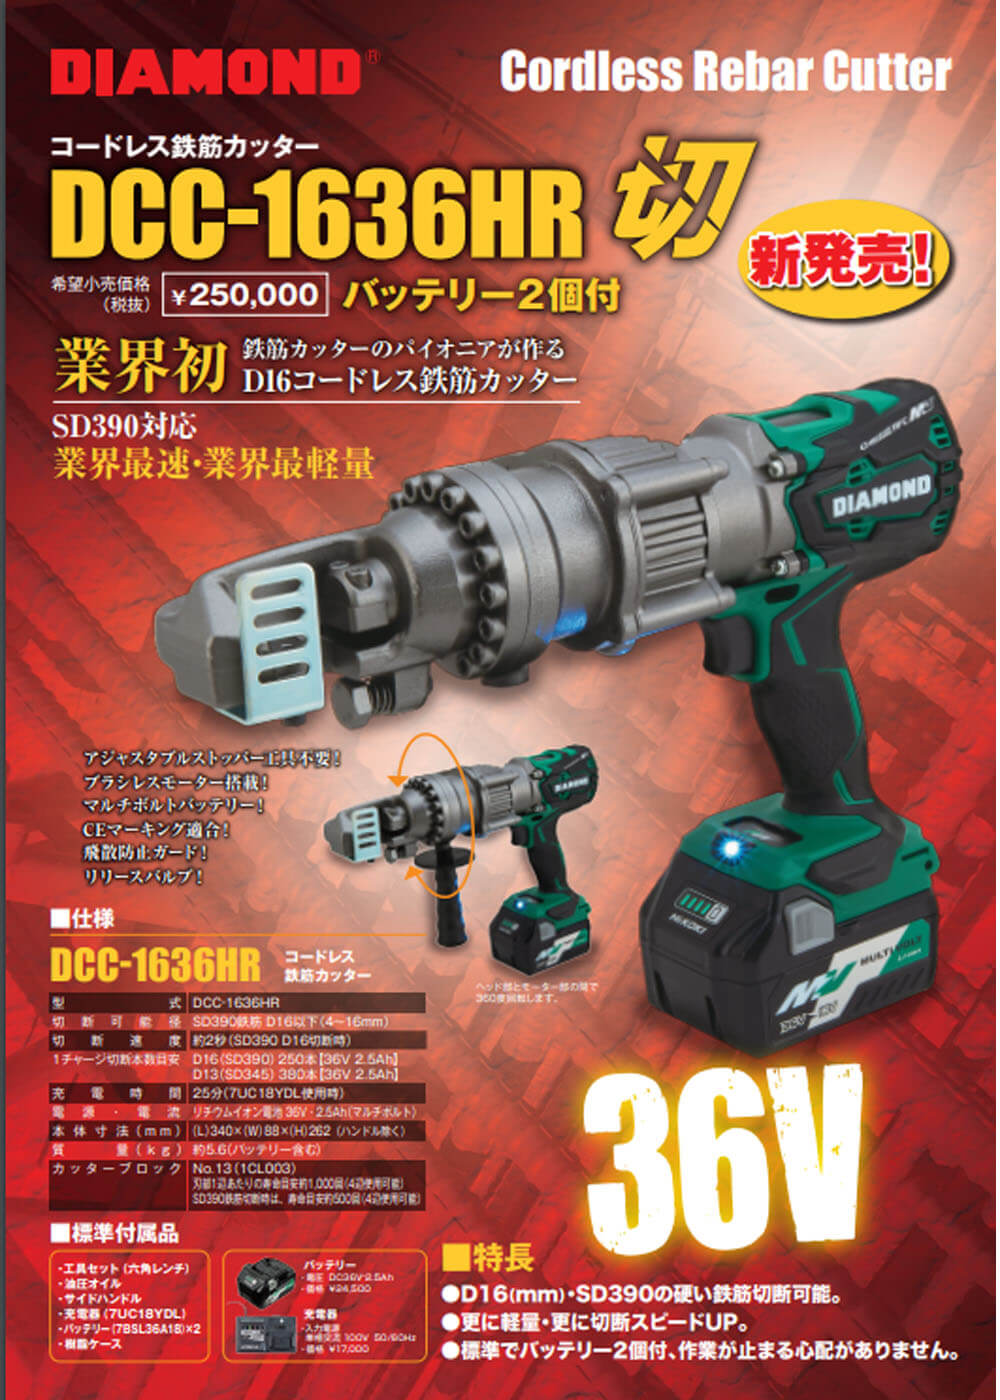 IKK DCC-1636HR 36Vコードレス鉄筋カッター ウエダ金物【公式サイト】